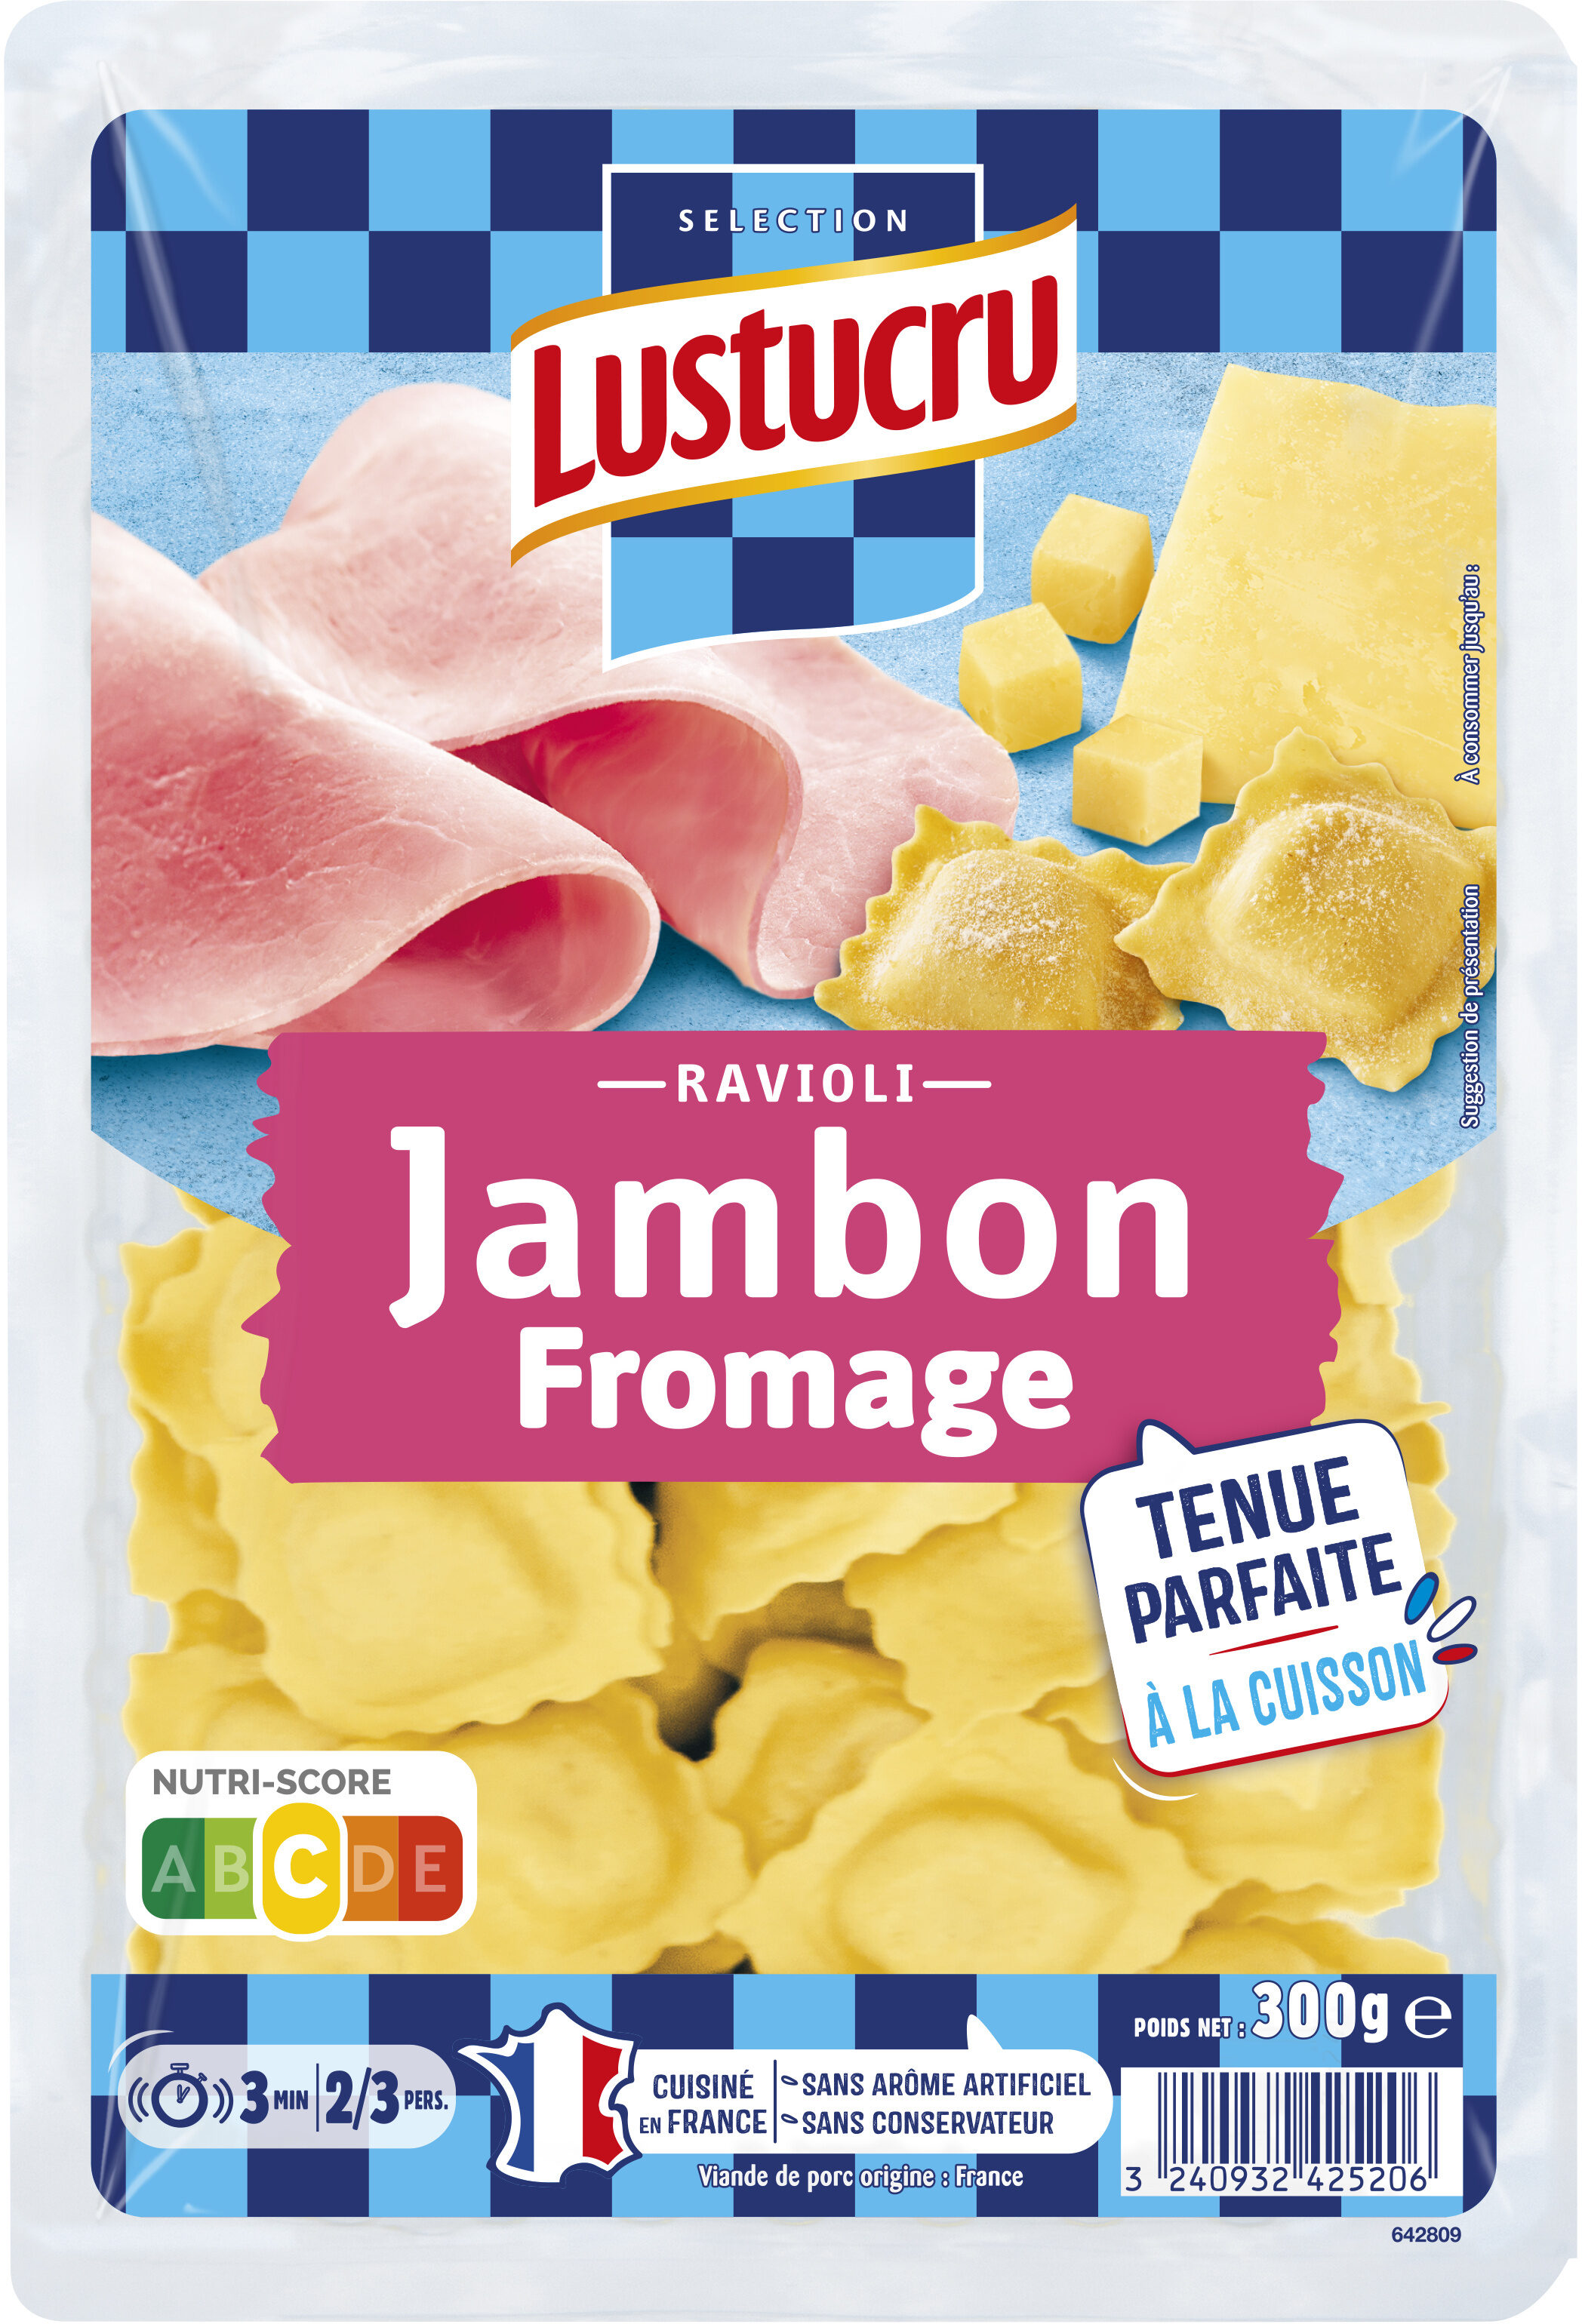 Lustucru ravioli jambon fromage 300g - Product - fr